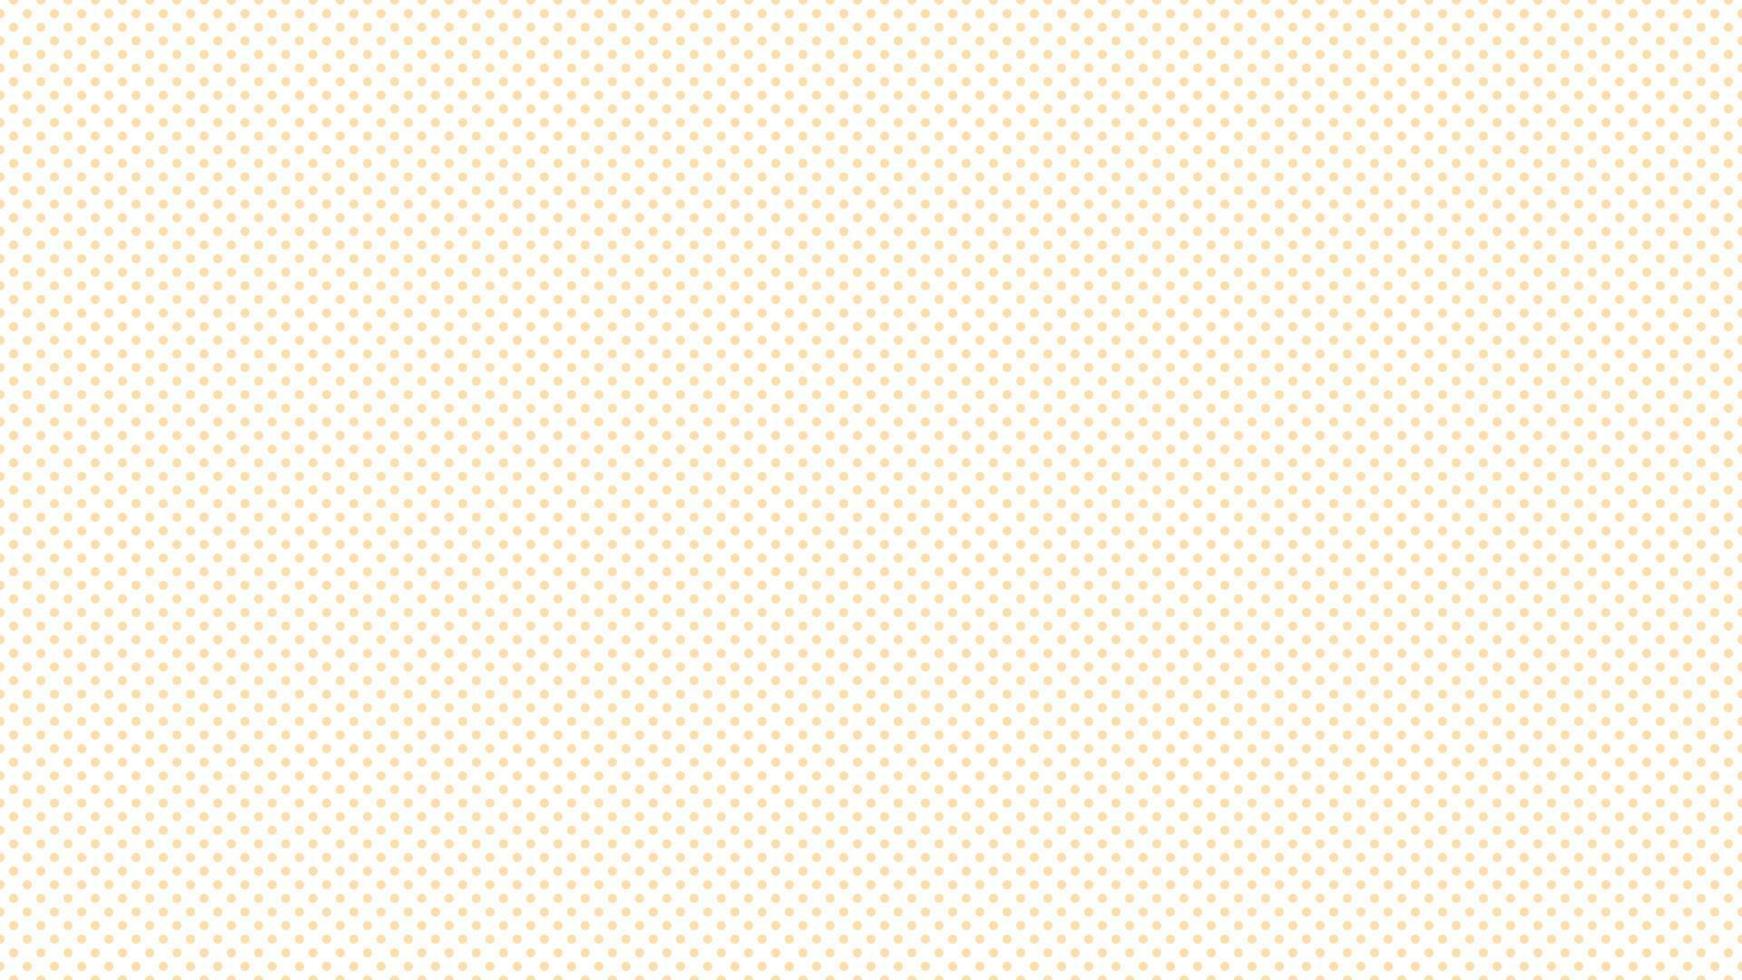 navajo white brown color polka dots background vector